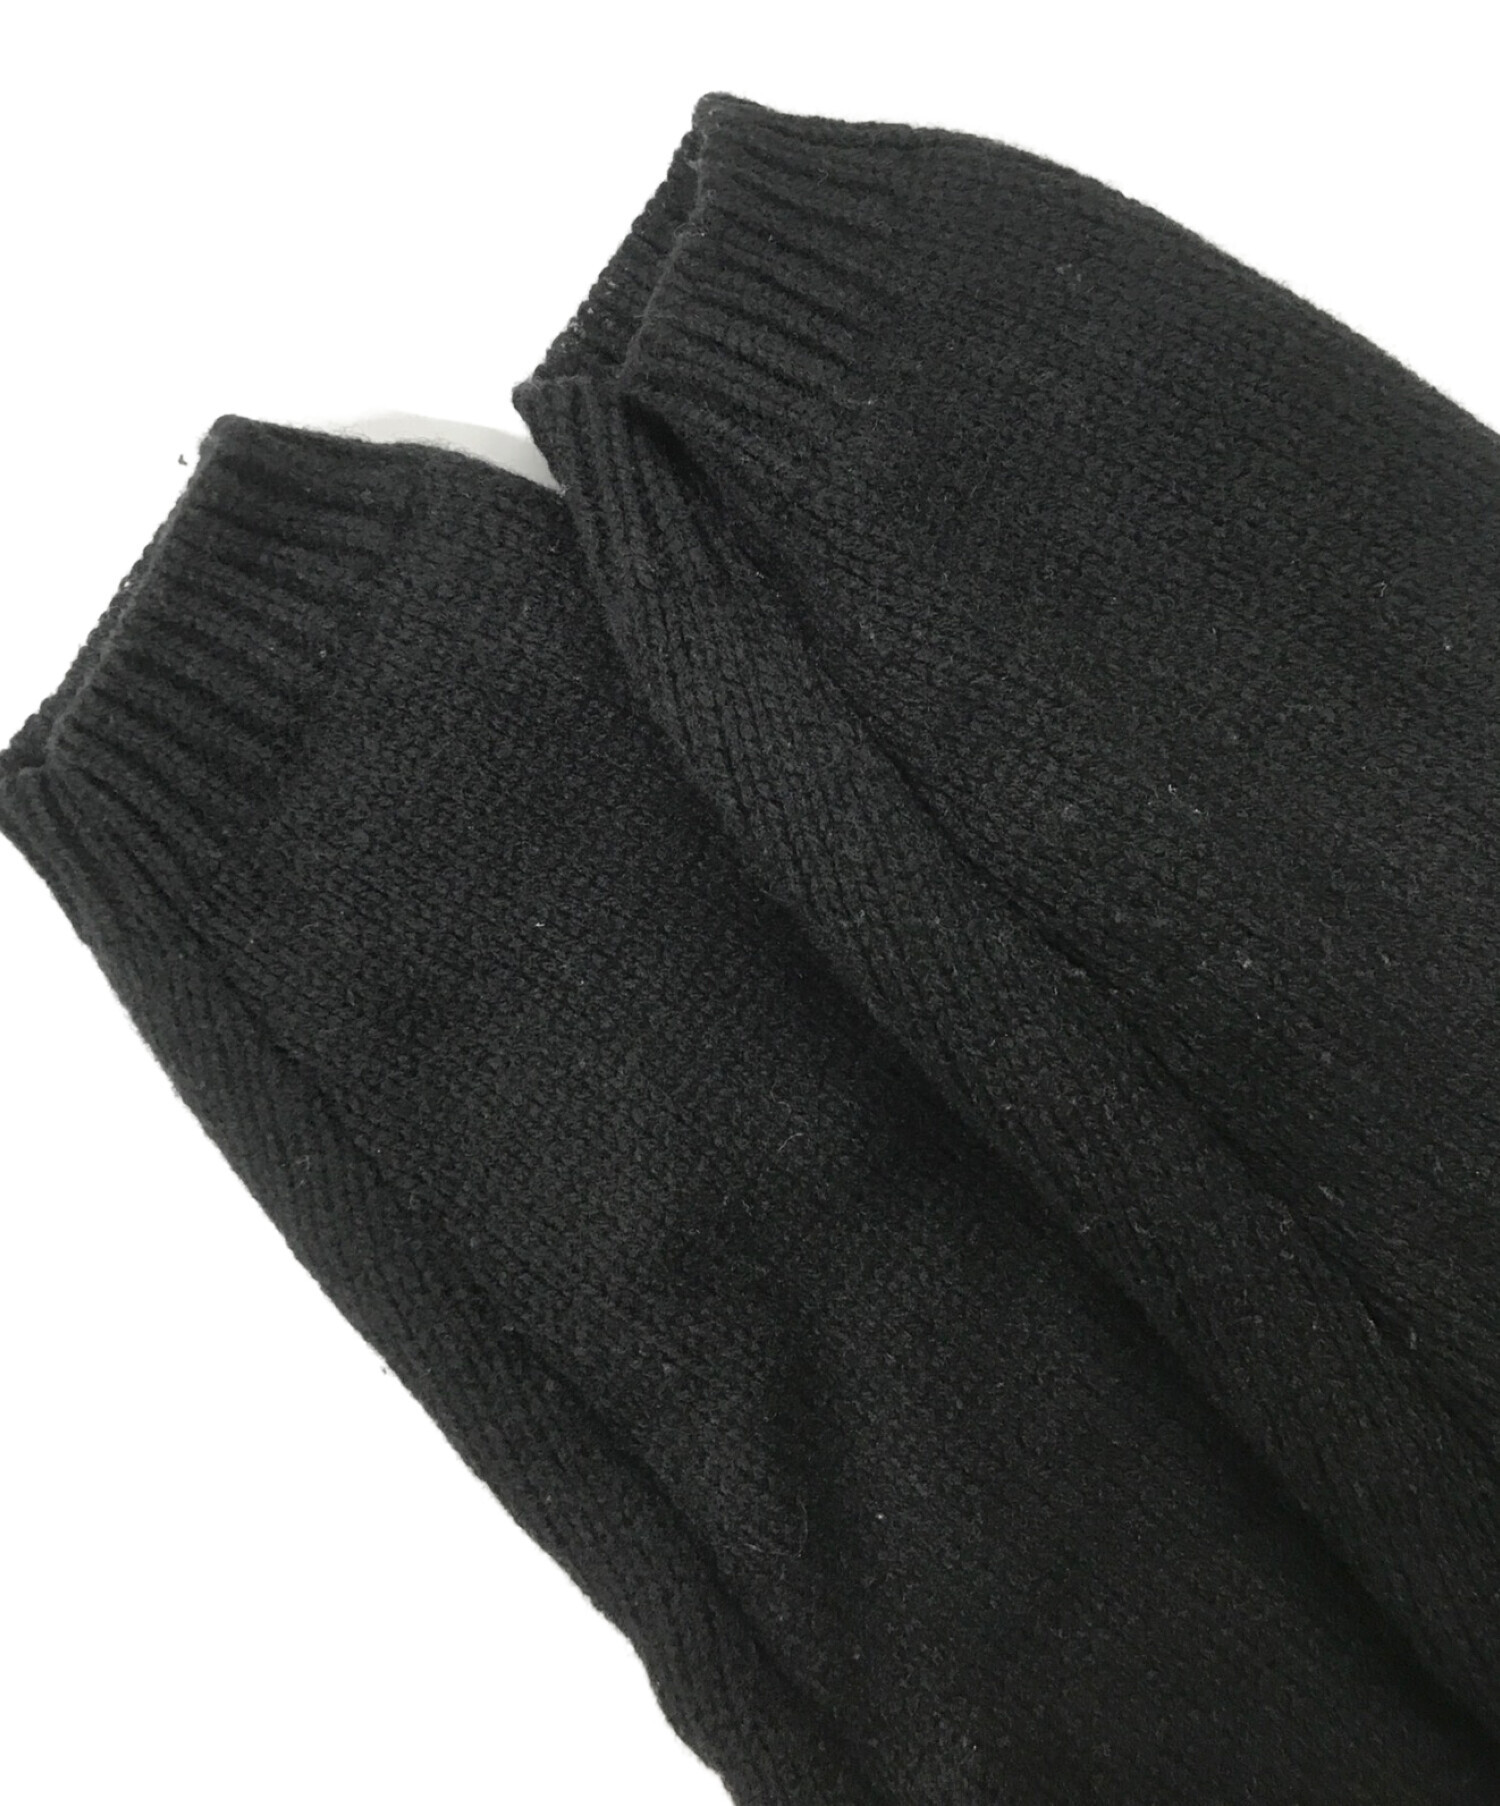 YOHJI YAMAMOTO (ヨウジヤマモト) SUPREME (シュプリーム) Supreme Yohji Yamamoto  Sweater/シュプリームヨウジヤマモトセーター ブラック サイズ:L